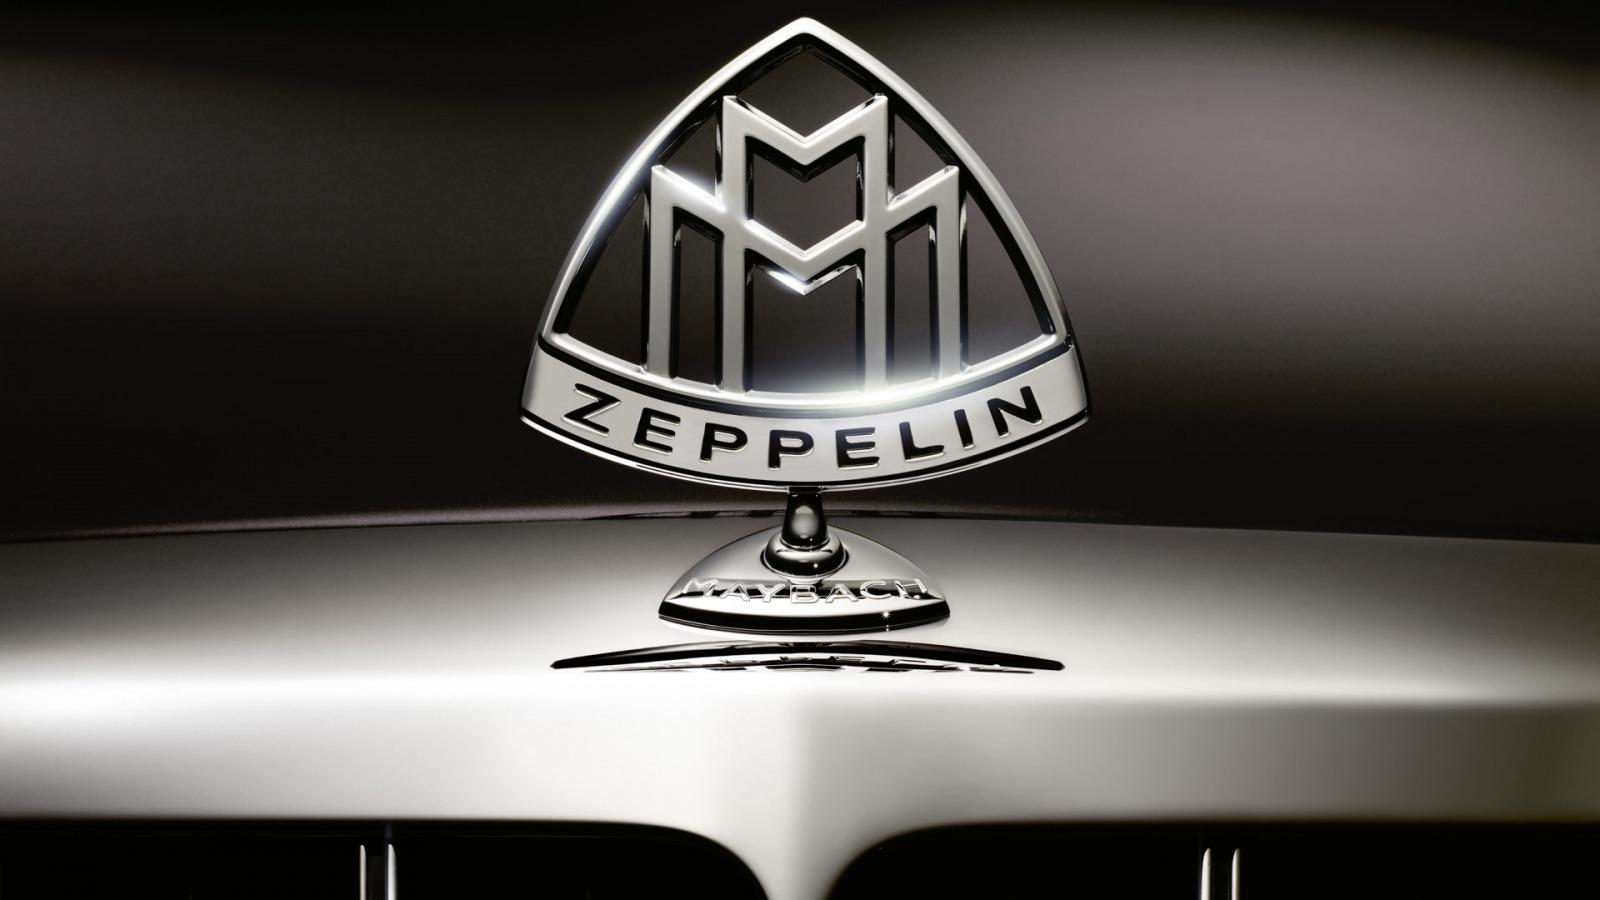 Maybach Zeppelin logo Wallpaper Maybach Cars Wallpaper in jpg